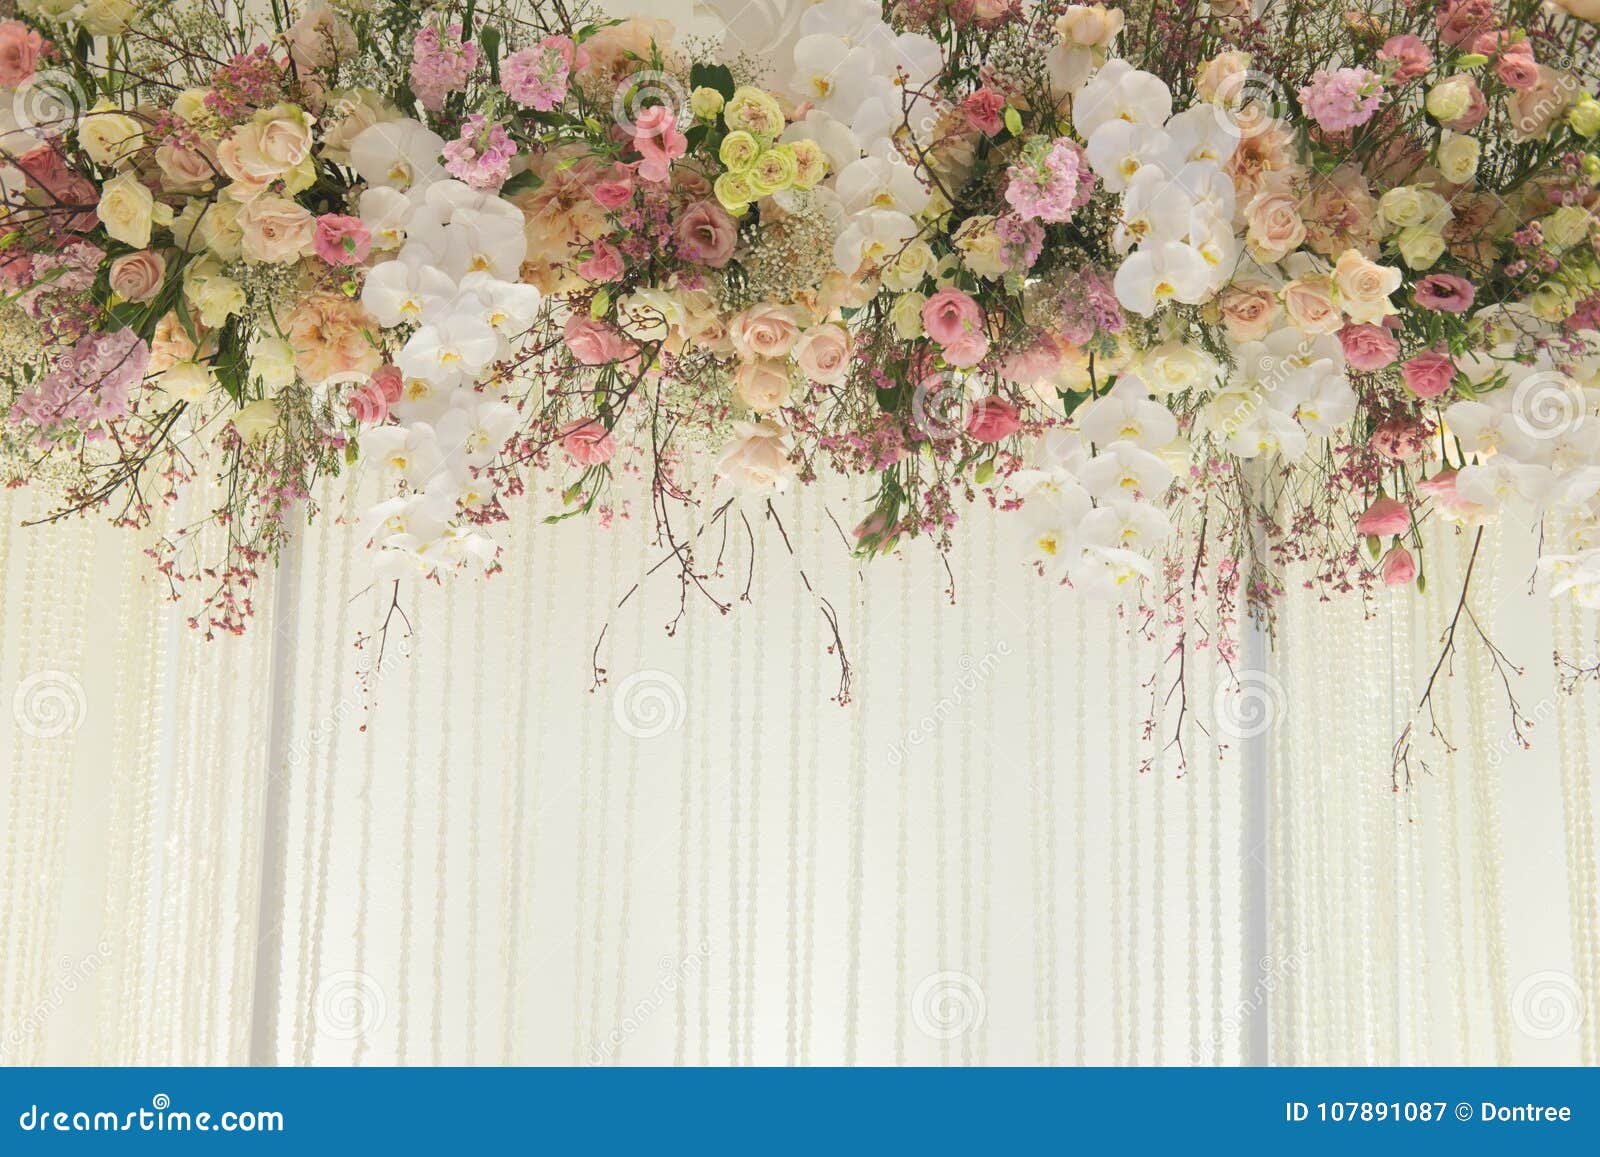 Indoor Luxurious Wedding Ceremony Backdrop Stock Image - Image of blue ...